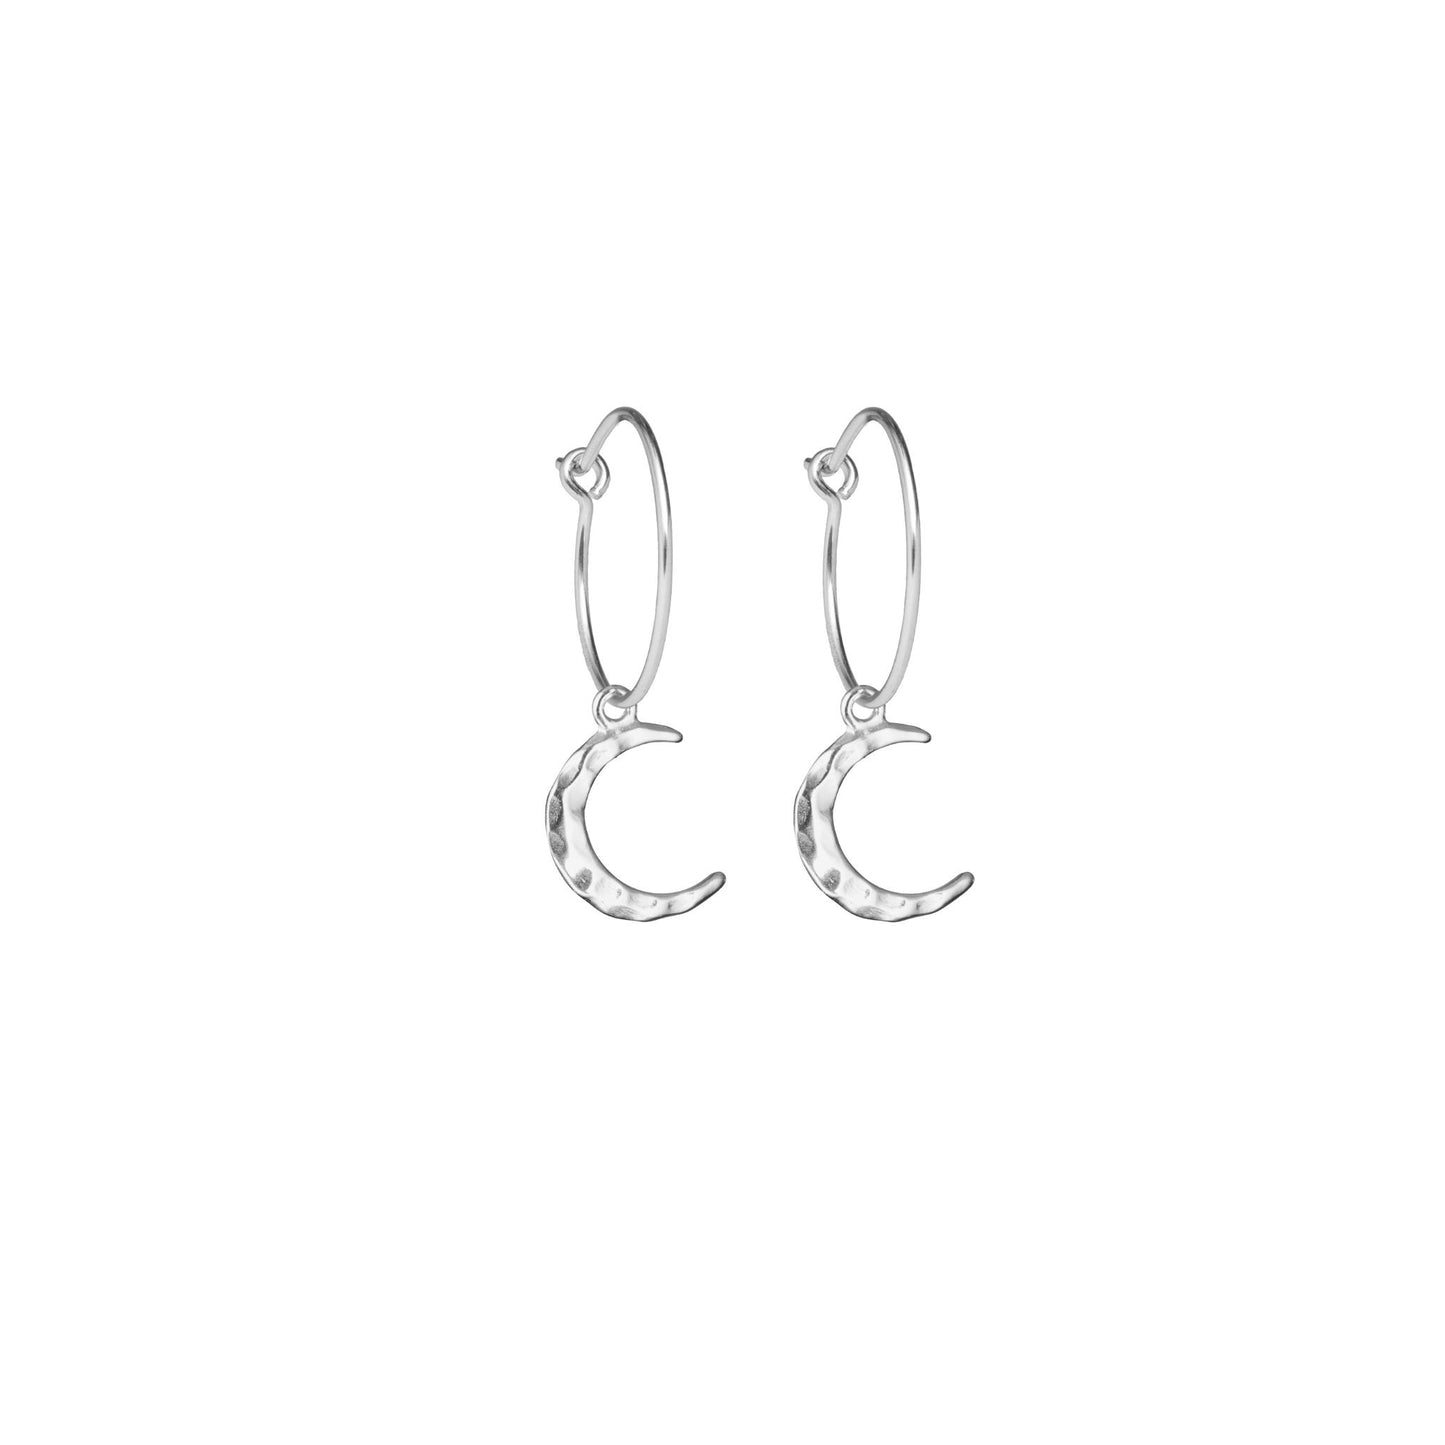 Celestial Charm Hoop Earrings (Sterling Silver)